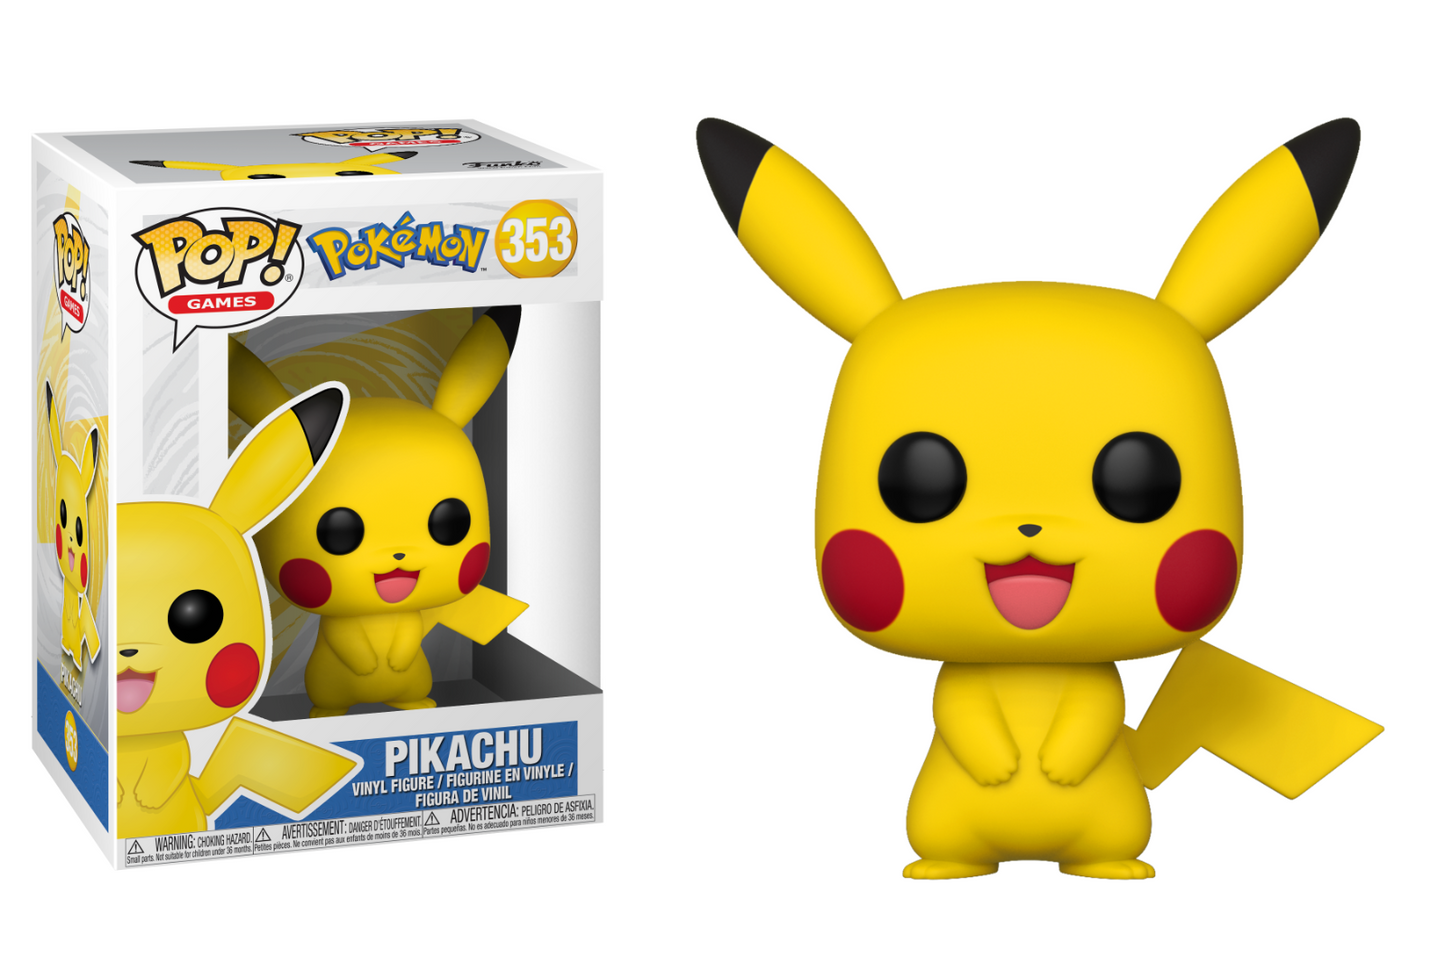 Pokémon - Pikachu 353